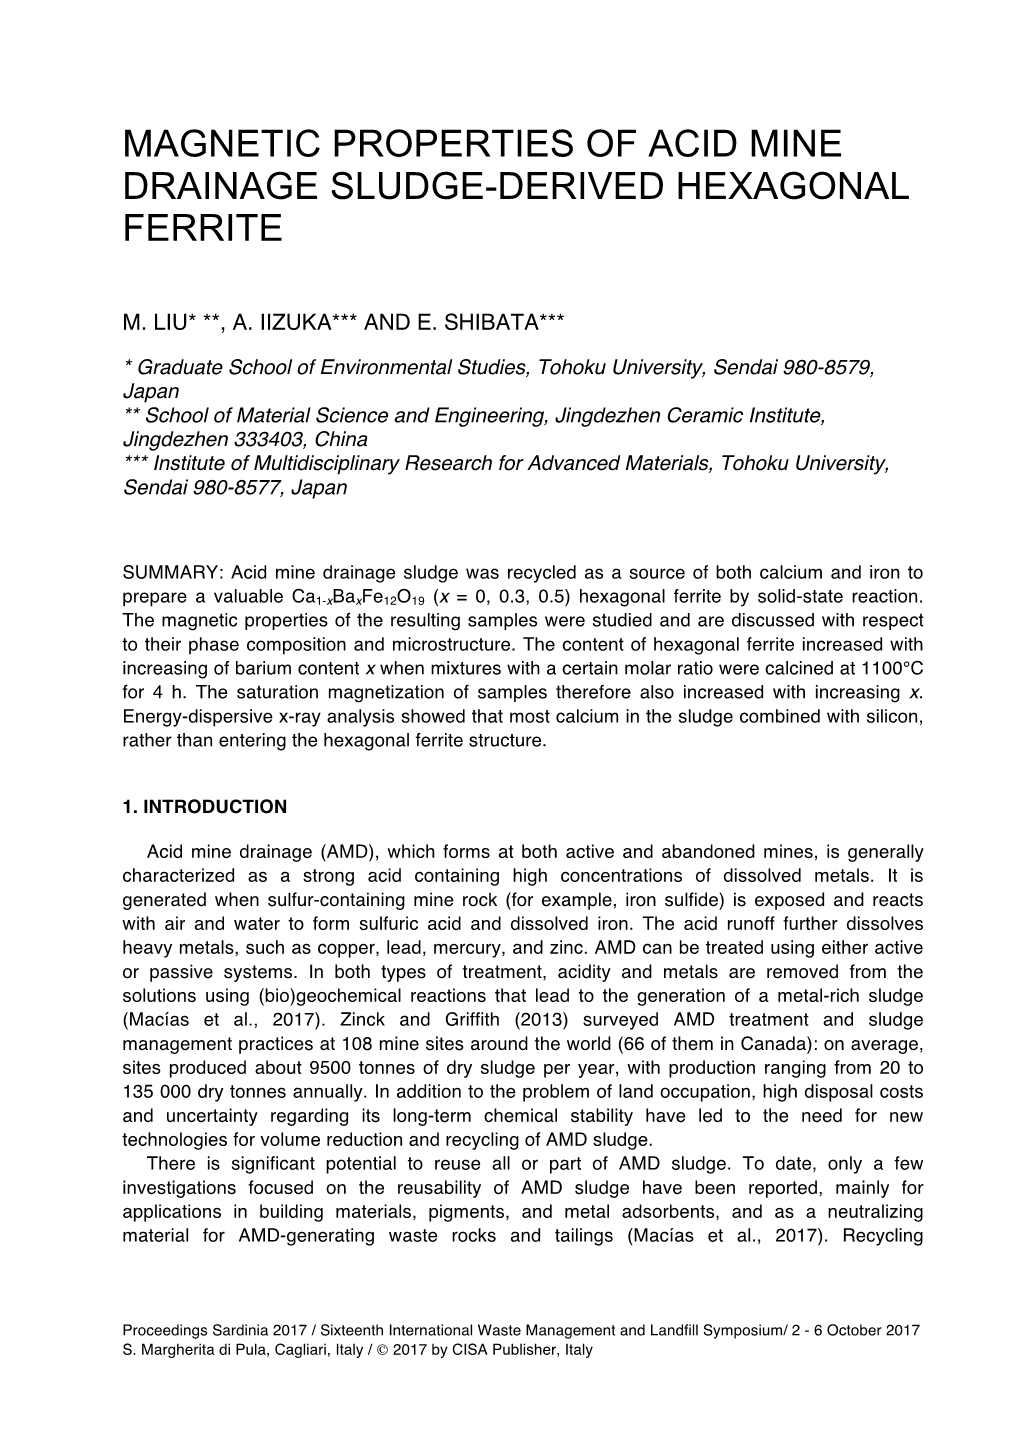 Magnetic Properties of Acid Mine Drainage Sludge-Derived Hexagonal Ferrite